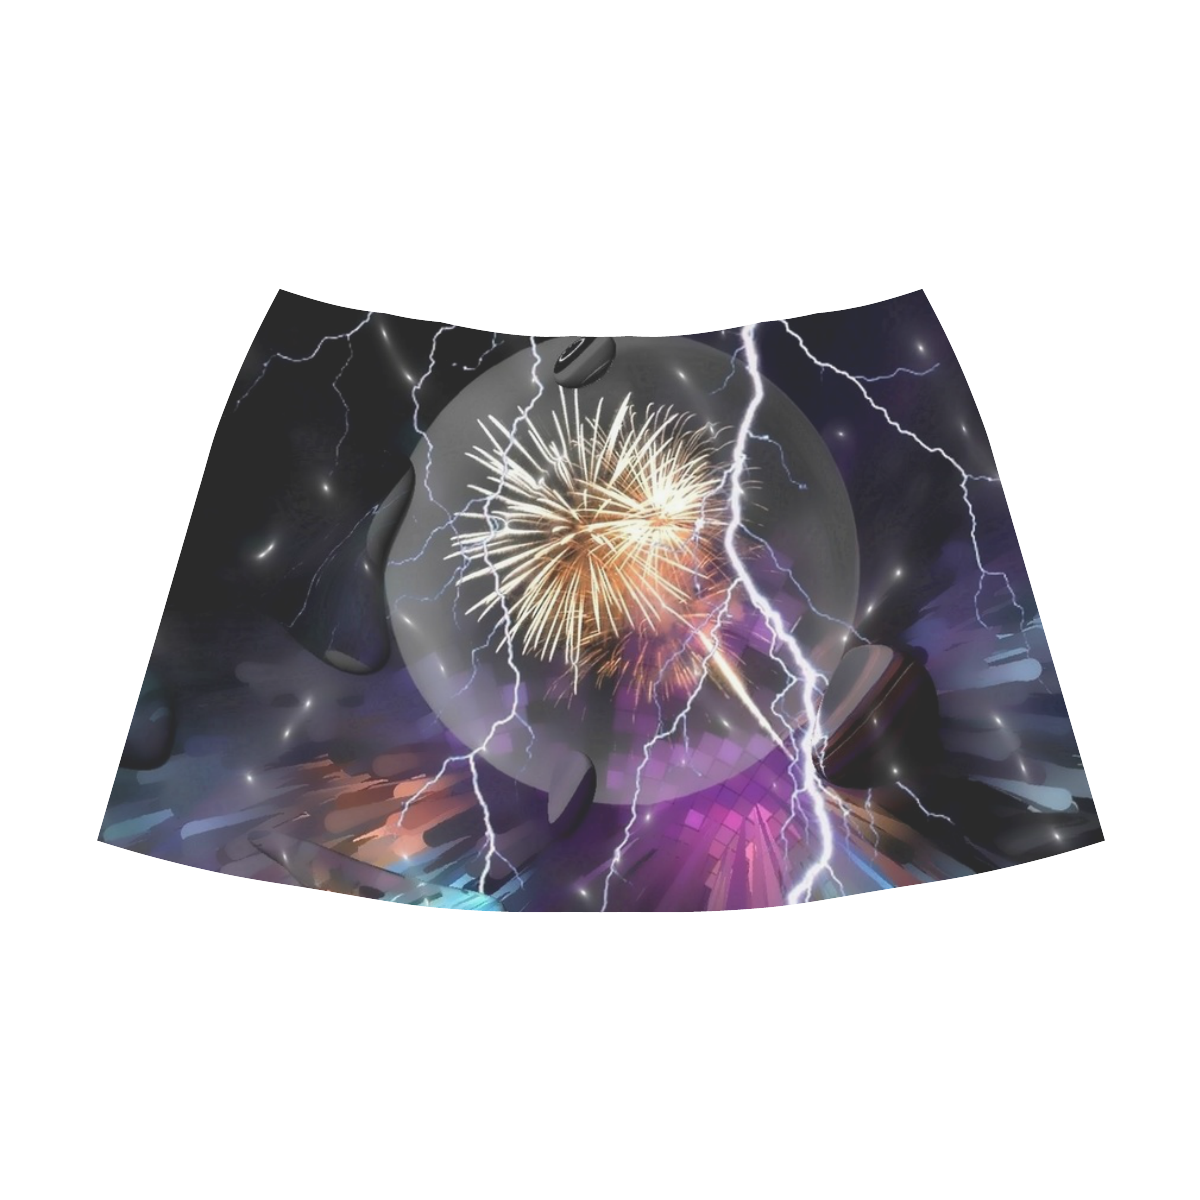 Space Night by Artdream Mnemosyne Women's Crepe Skirt (Model D16)